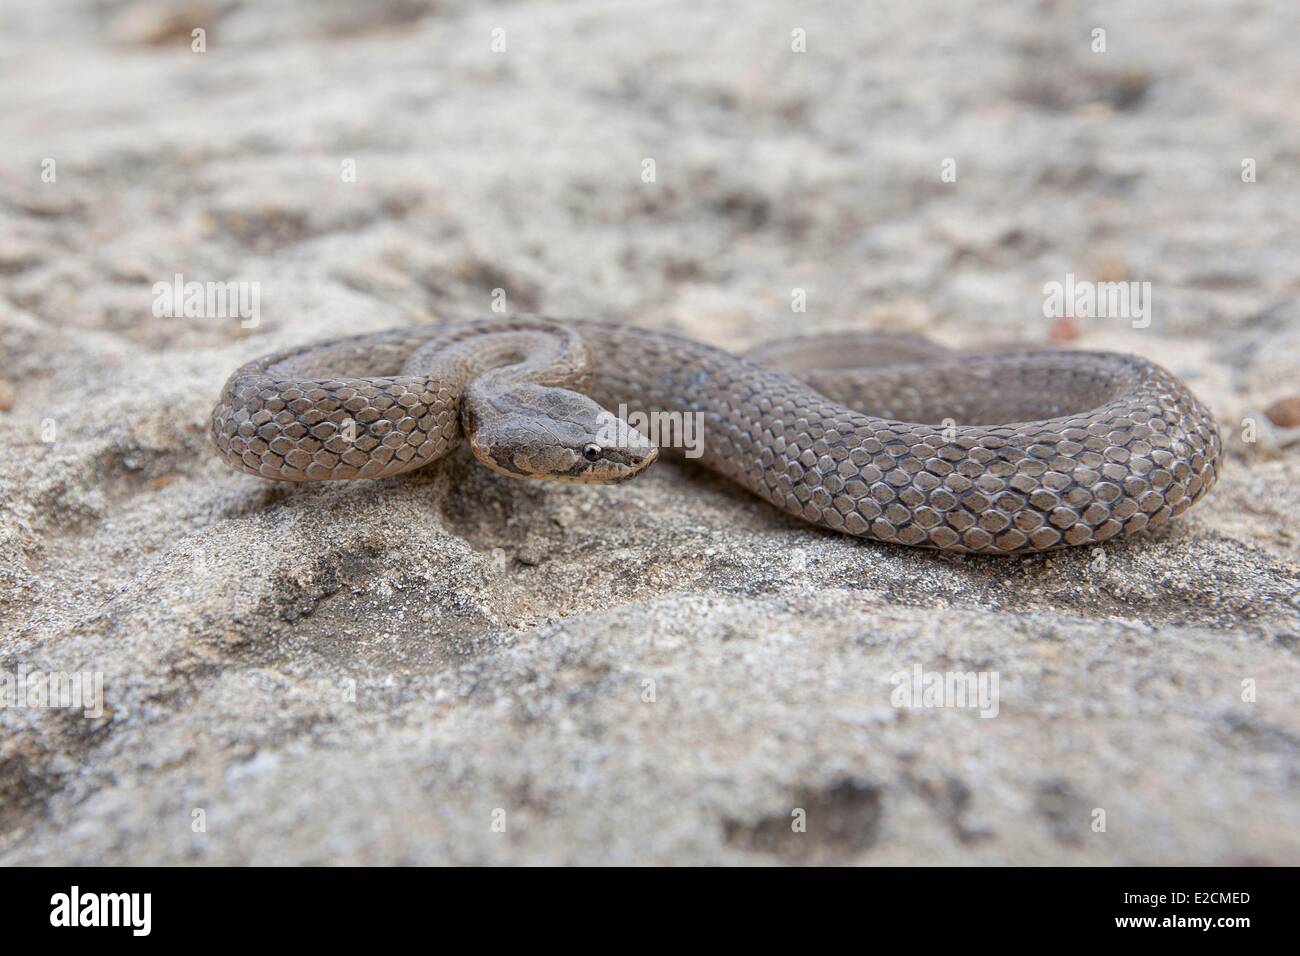 Tunisia Galite islands hooded snake (macroprotobon abukieri) Stock Photo